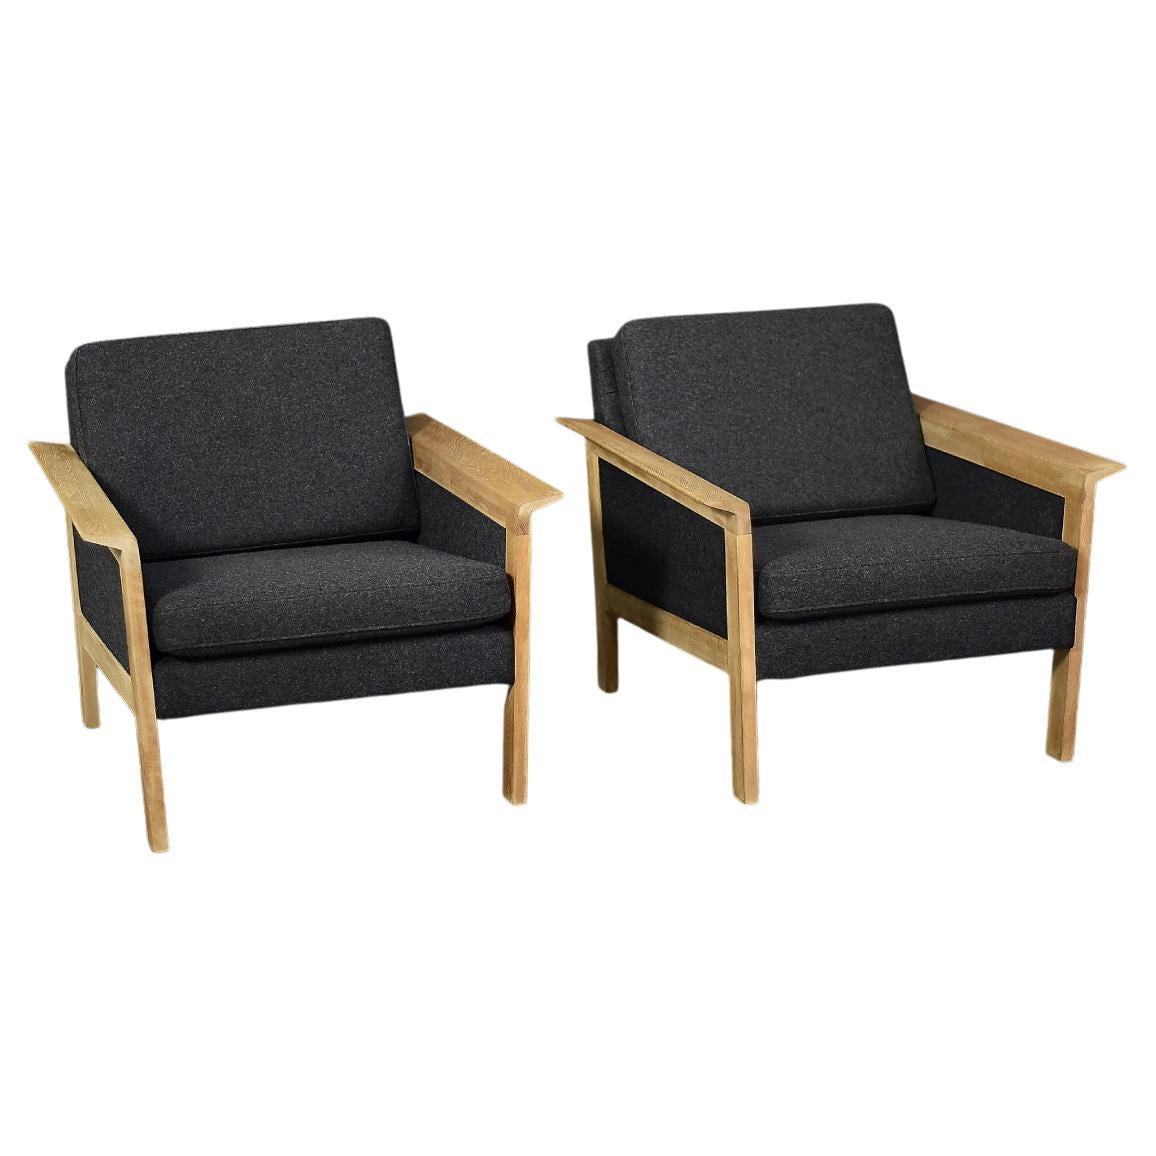 Pair of Vintage Mid-Century Danish Modern Oak & Gray Felt Lounge Chairs, 1960s For Sale